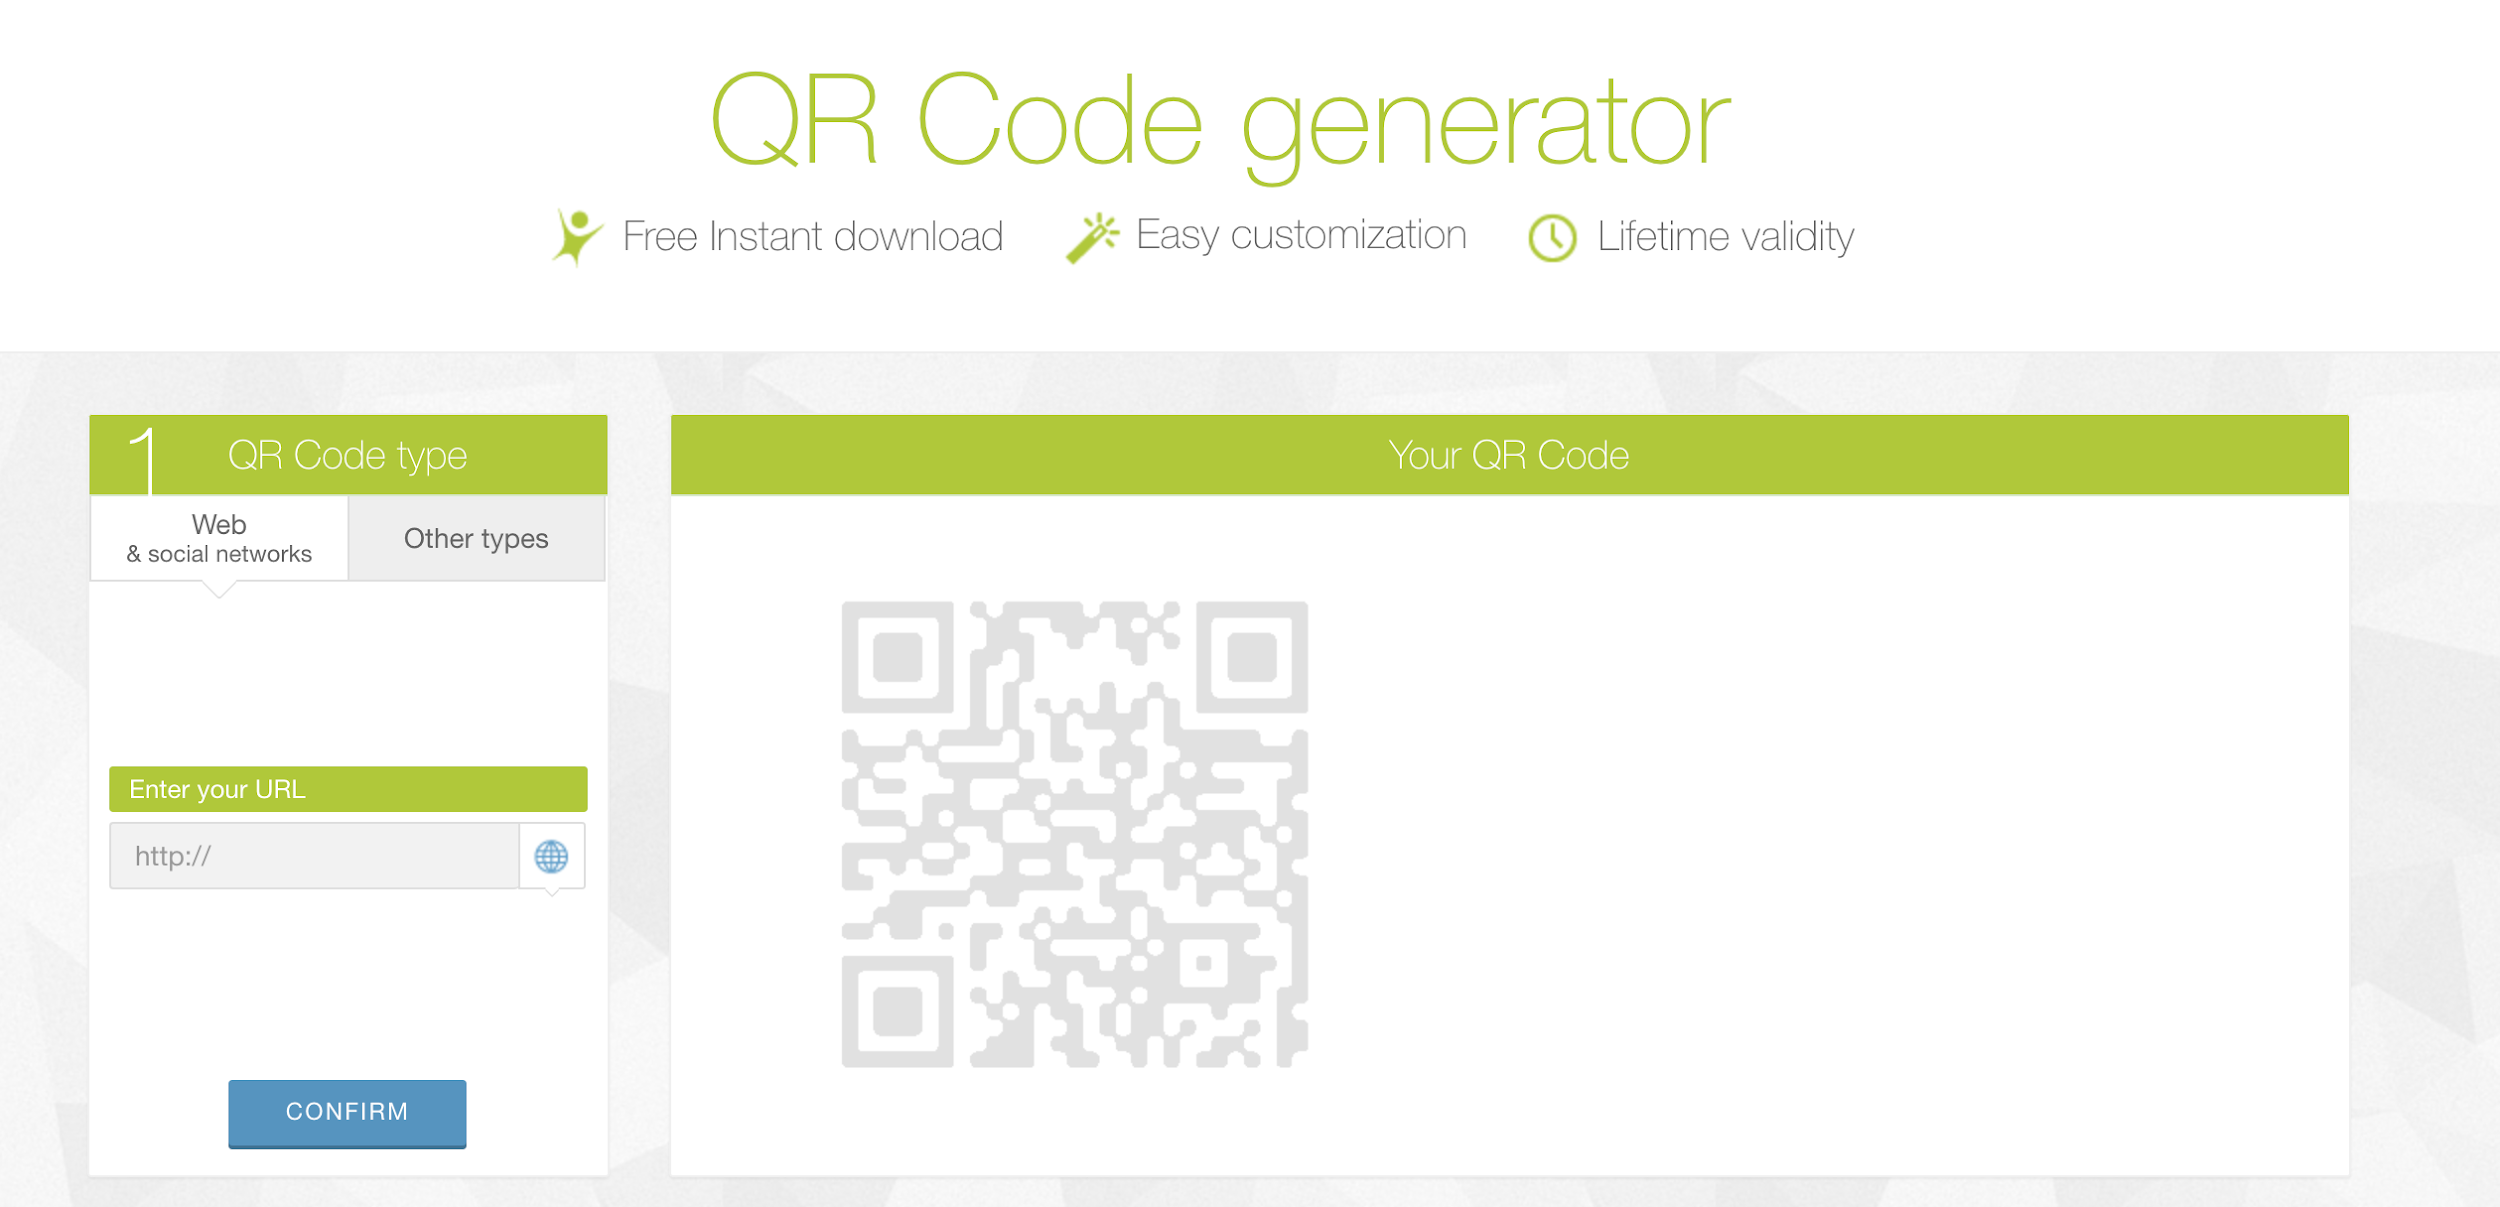 qr code generator free permanent